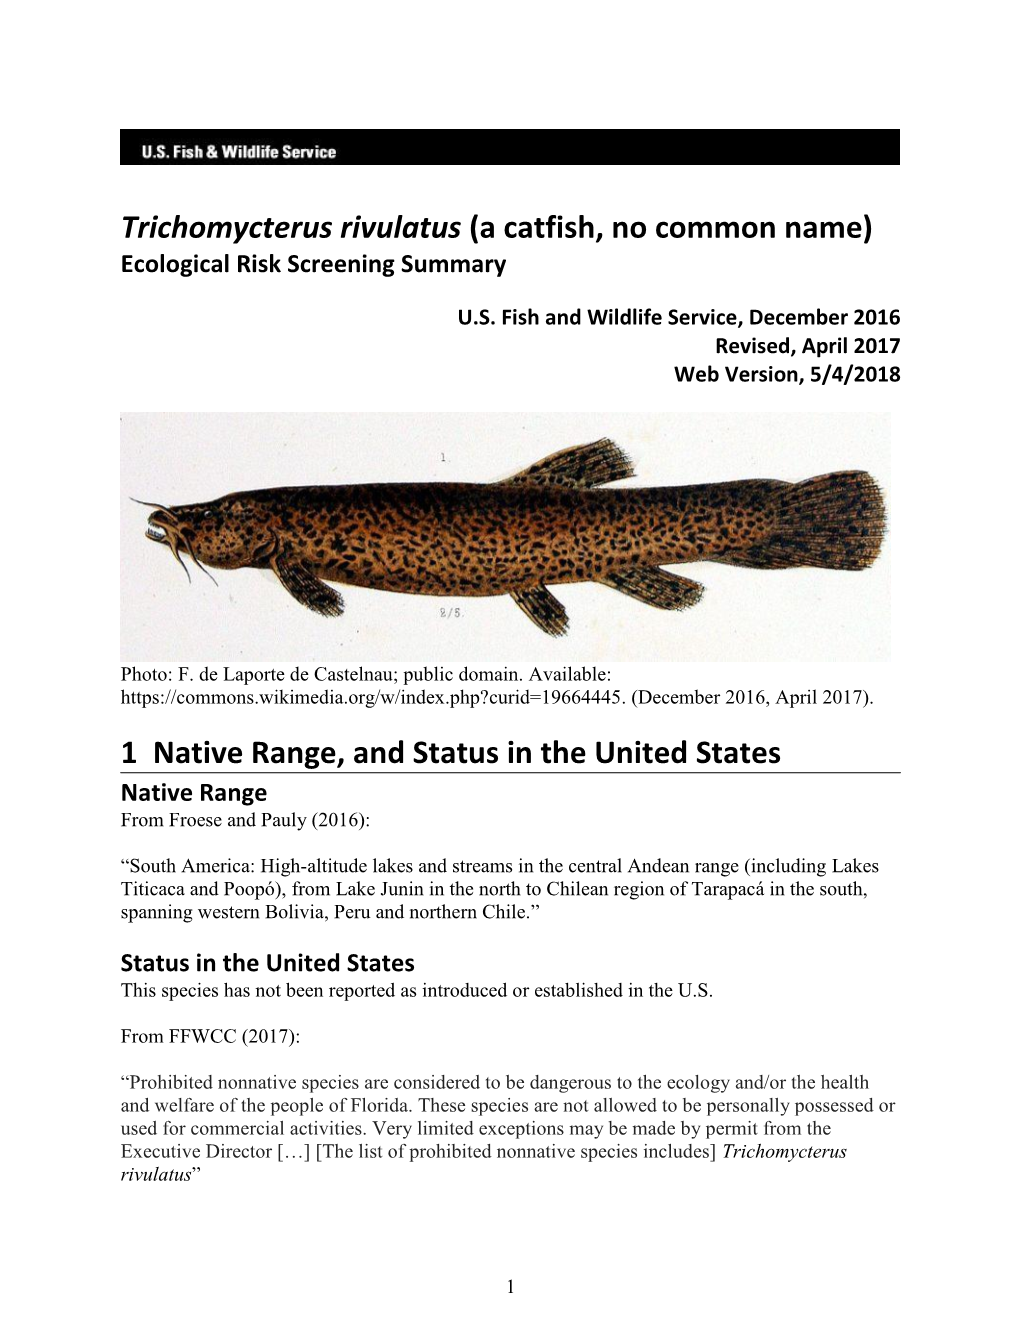 Trichomycterus Rivulatus (A Catfish, No Common Name) Ecological Risk Screening Summary